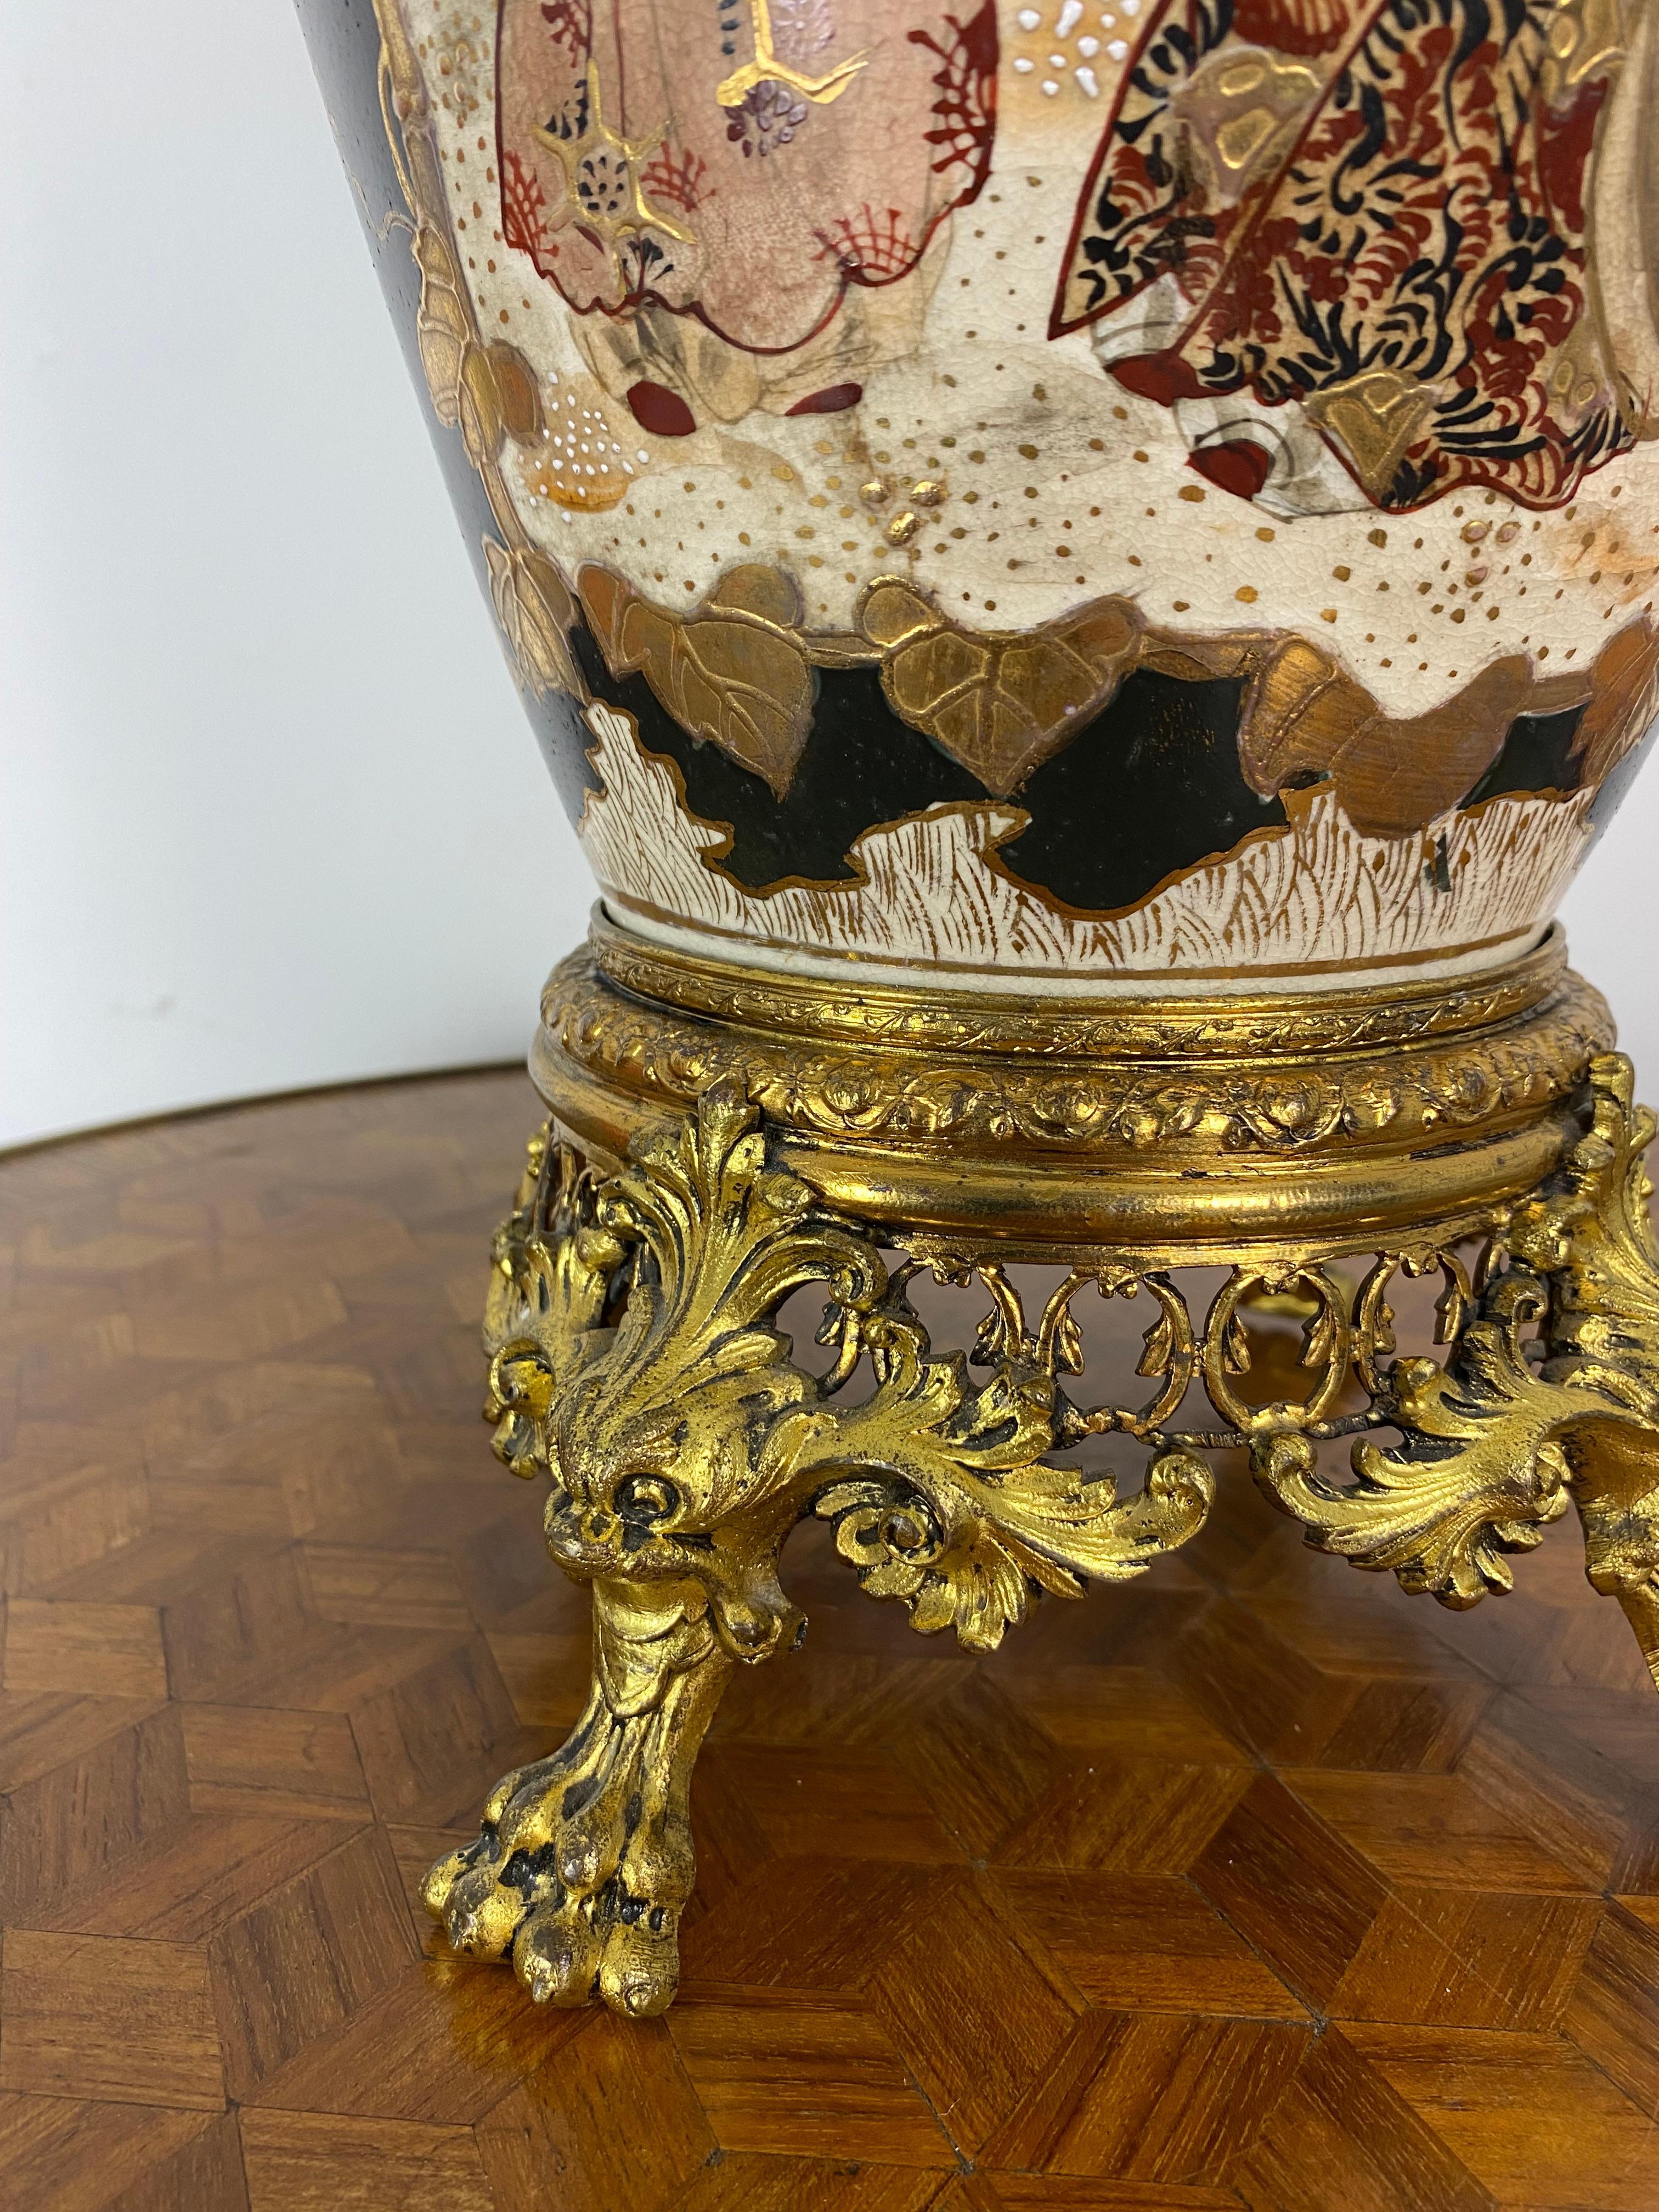 Japan Satsuma Porcelain Vase and Golden Metal 19th Century For Sale 9